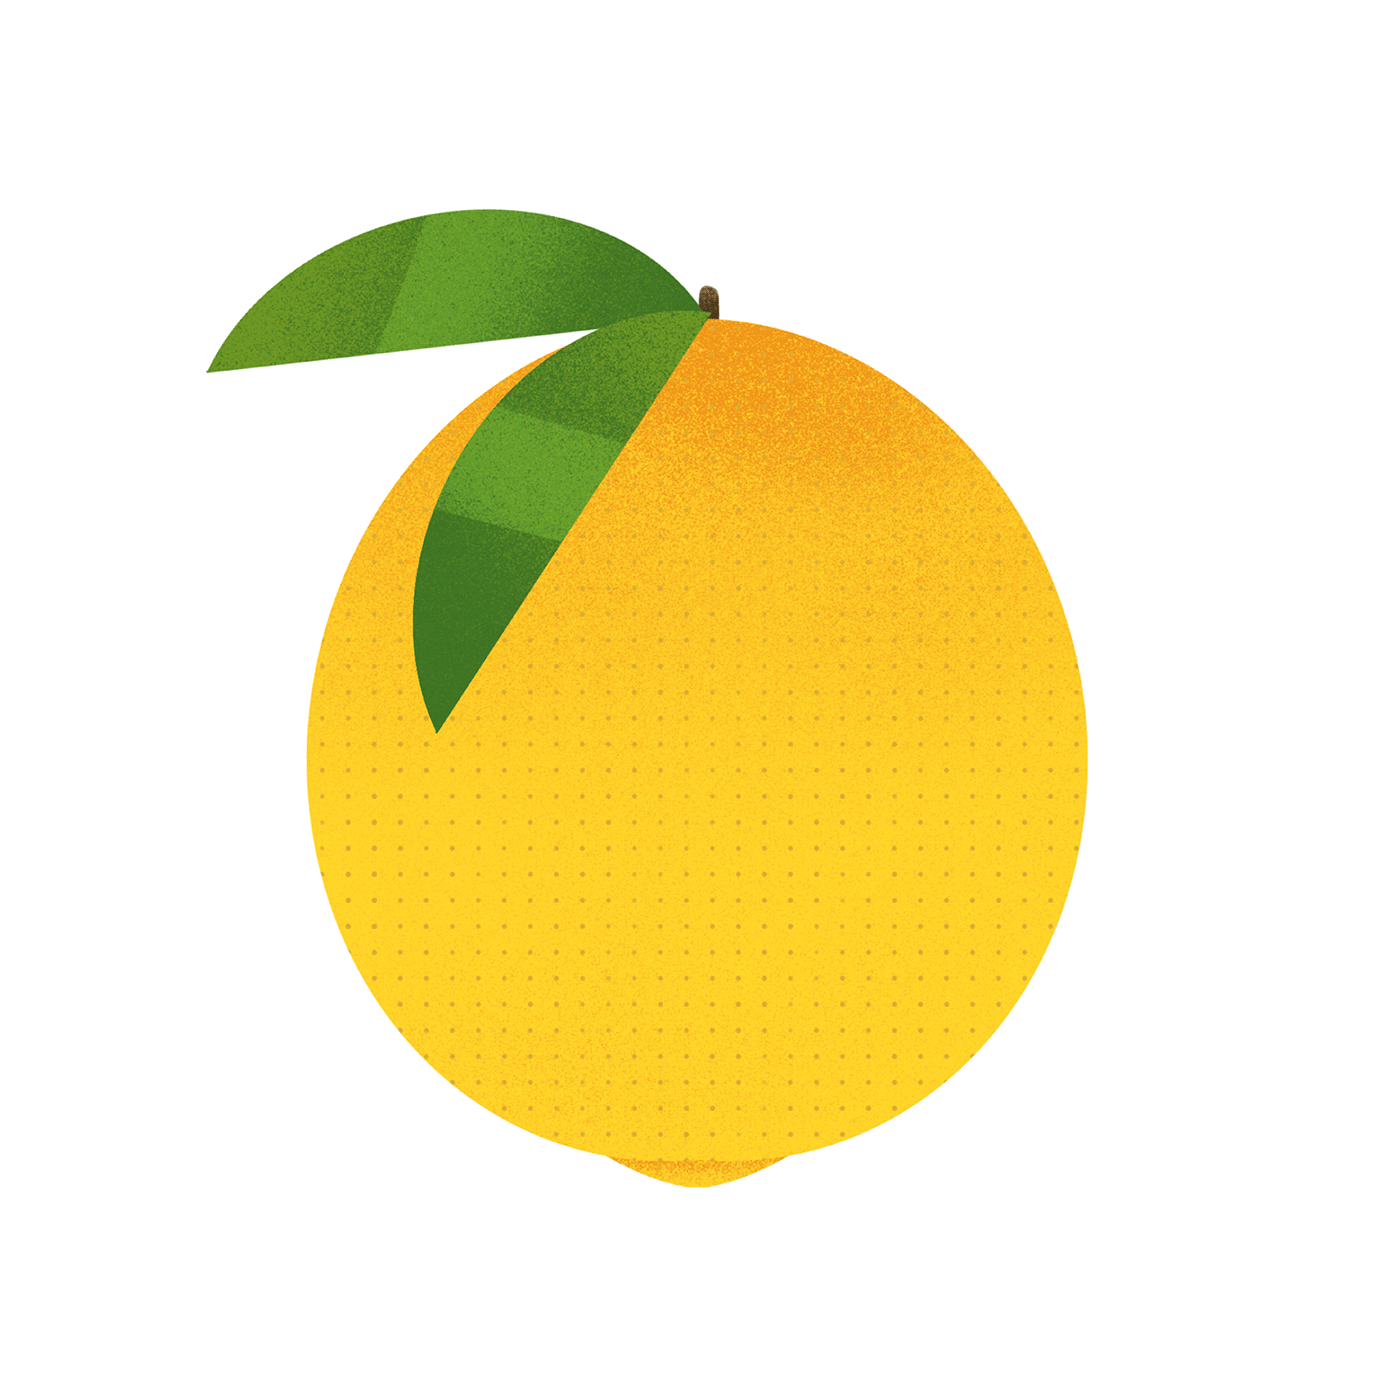 Digital Art  Drawing  Food  Fruit ILLUSTRATION  minimal simple vector 插圖 插畫